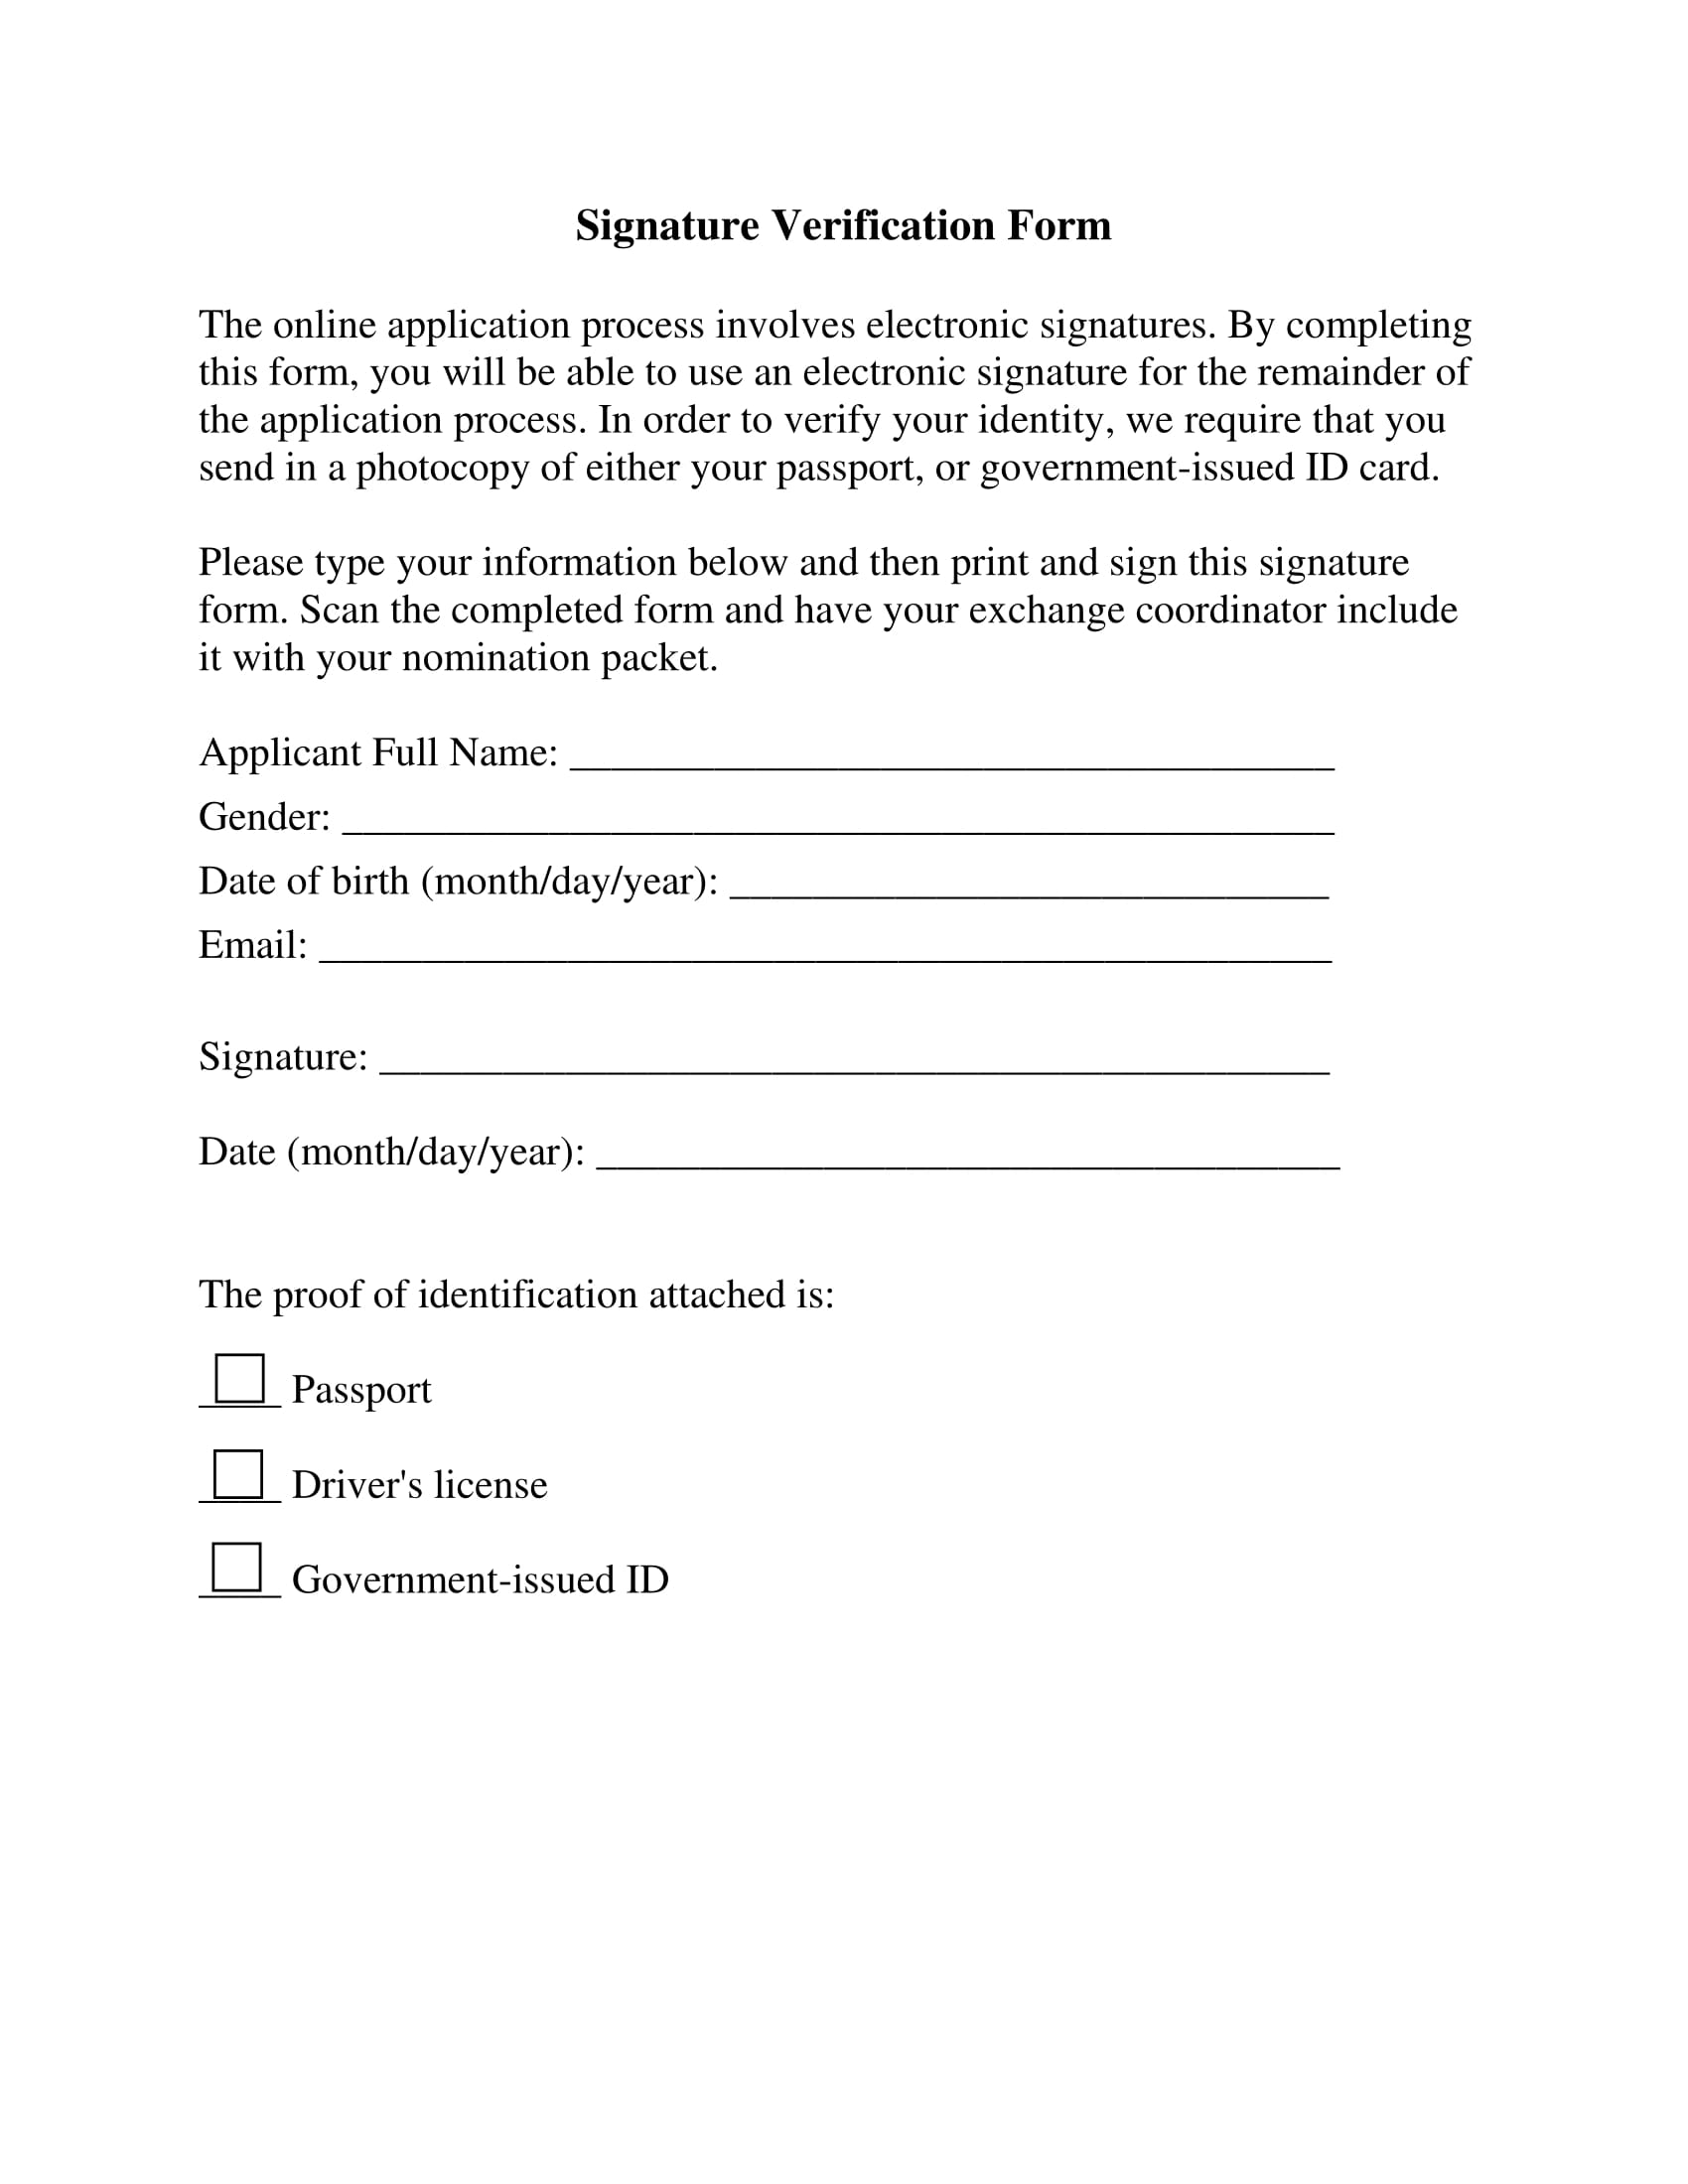 signature verification form sample 1